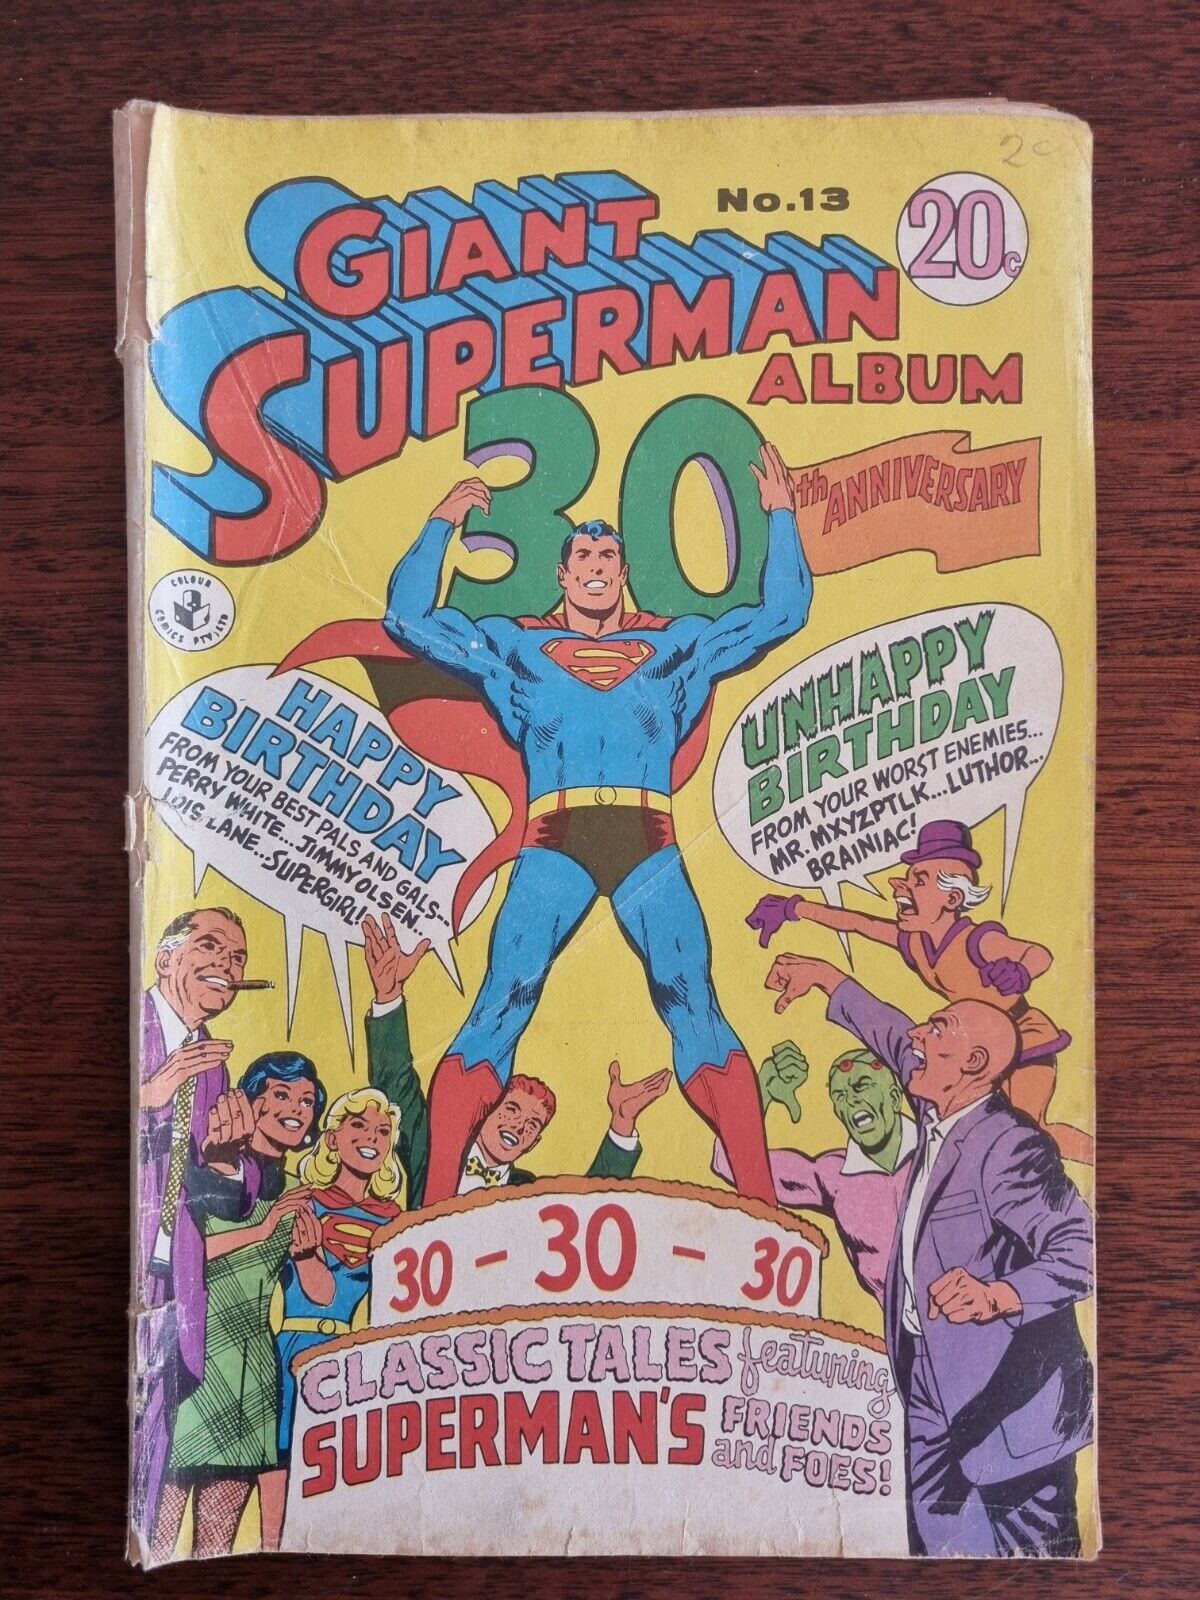 1969 GIANT SUPERMAN ALBUM #13 30th ANNIVERSARY 20c (AUSTRALIAN ISSUE)